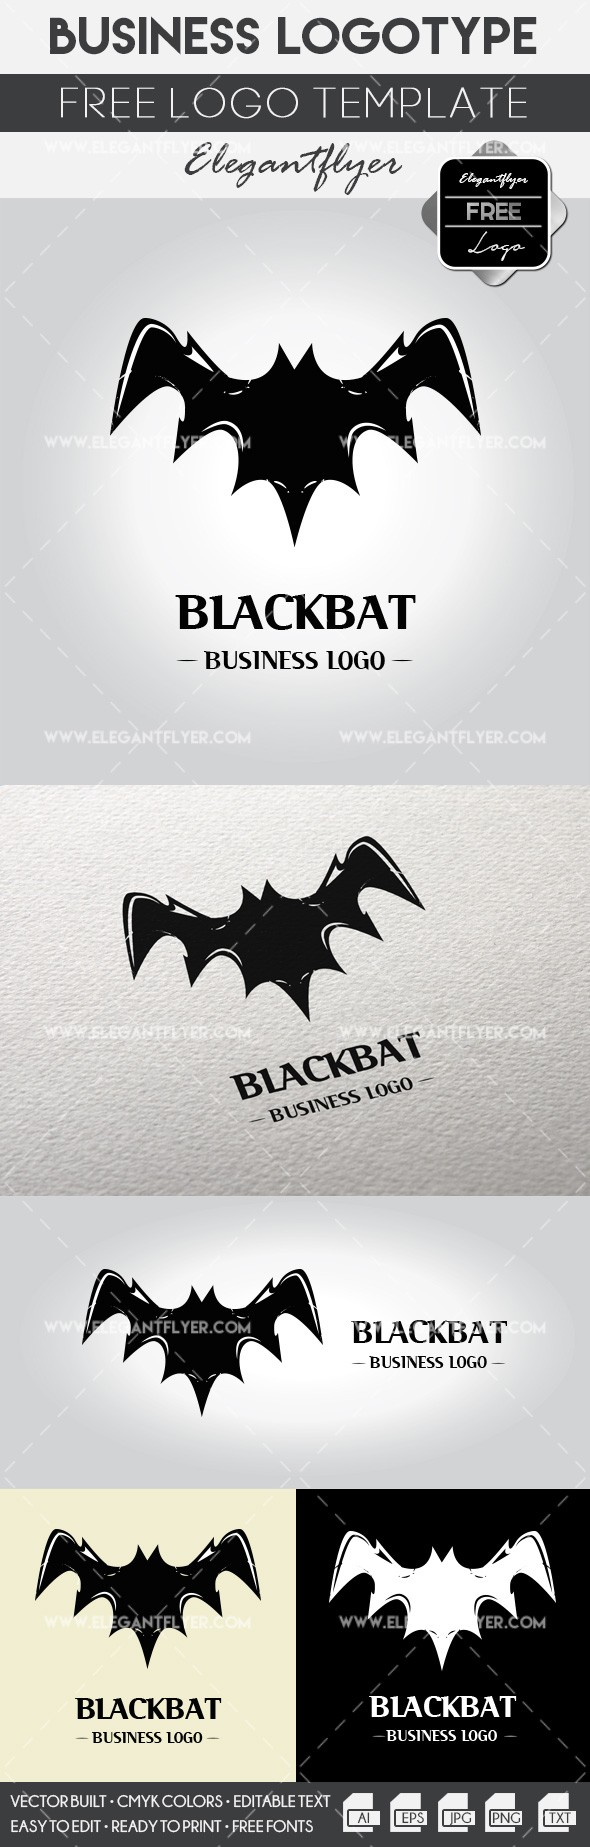 Blackbat Business - Entreprise Blackbat by ElegantFlyer